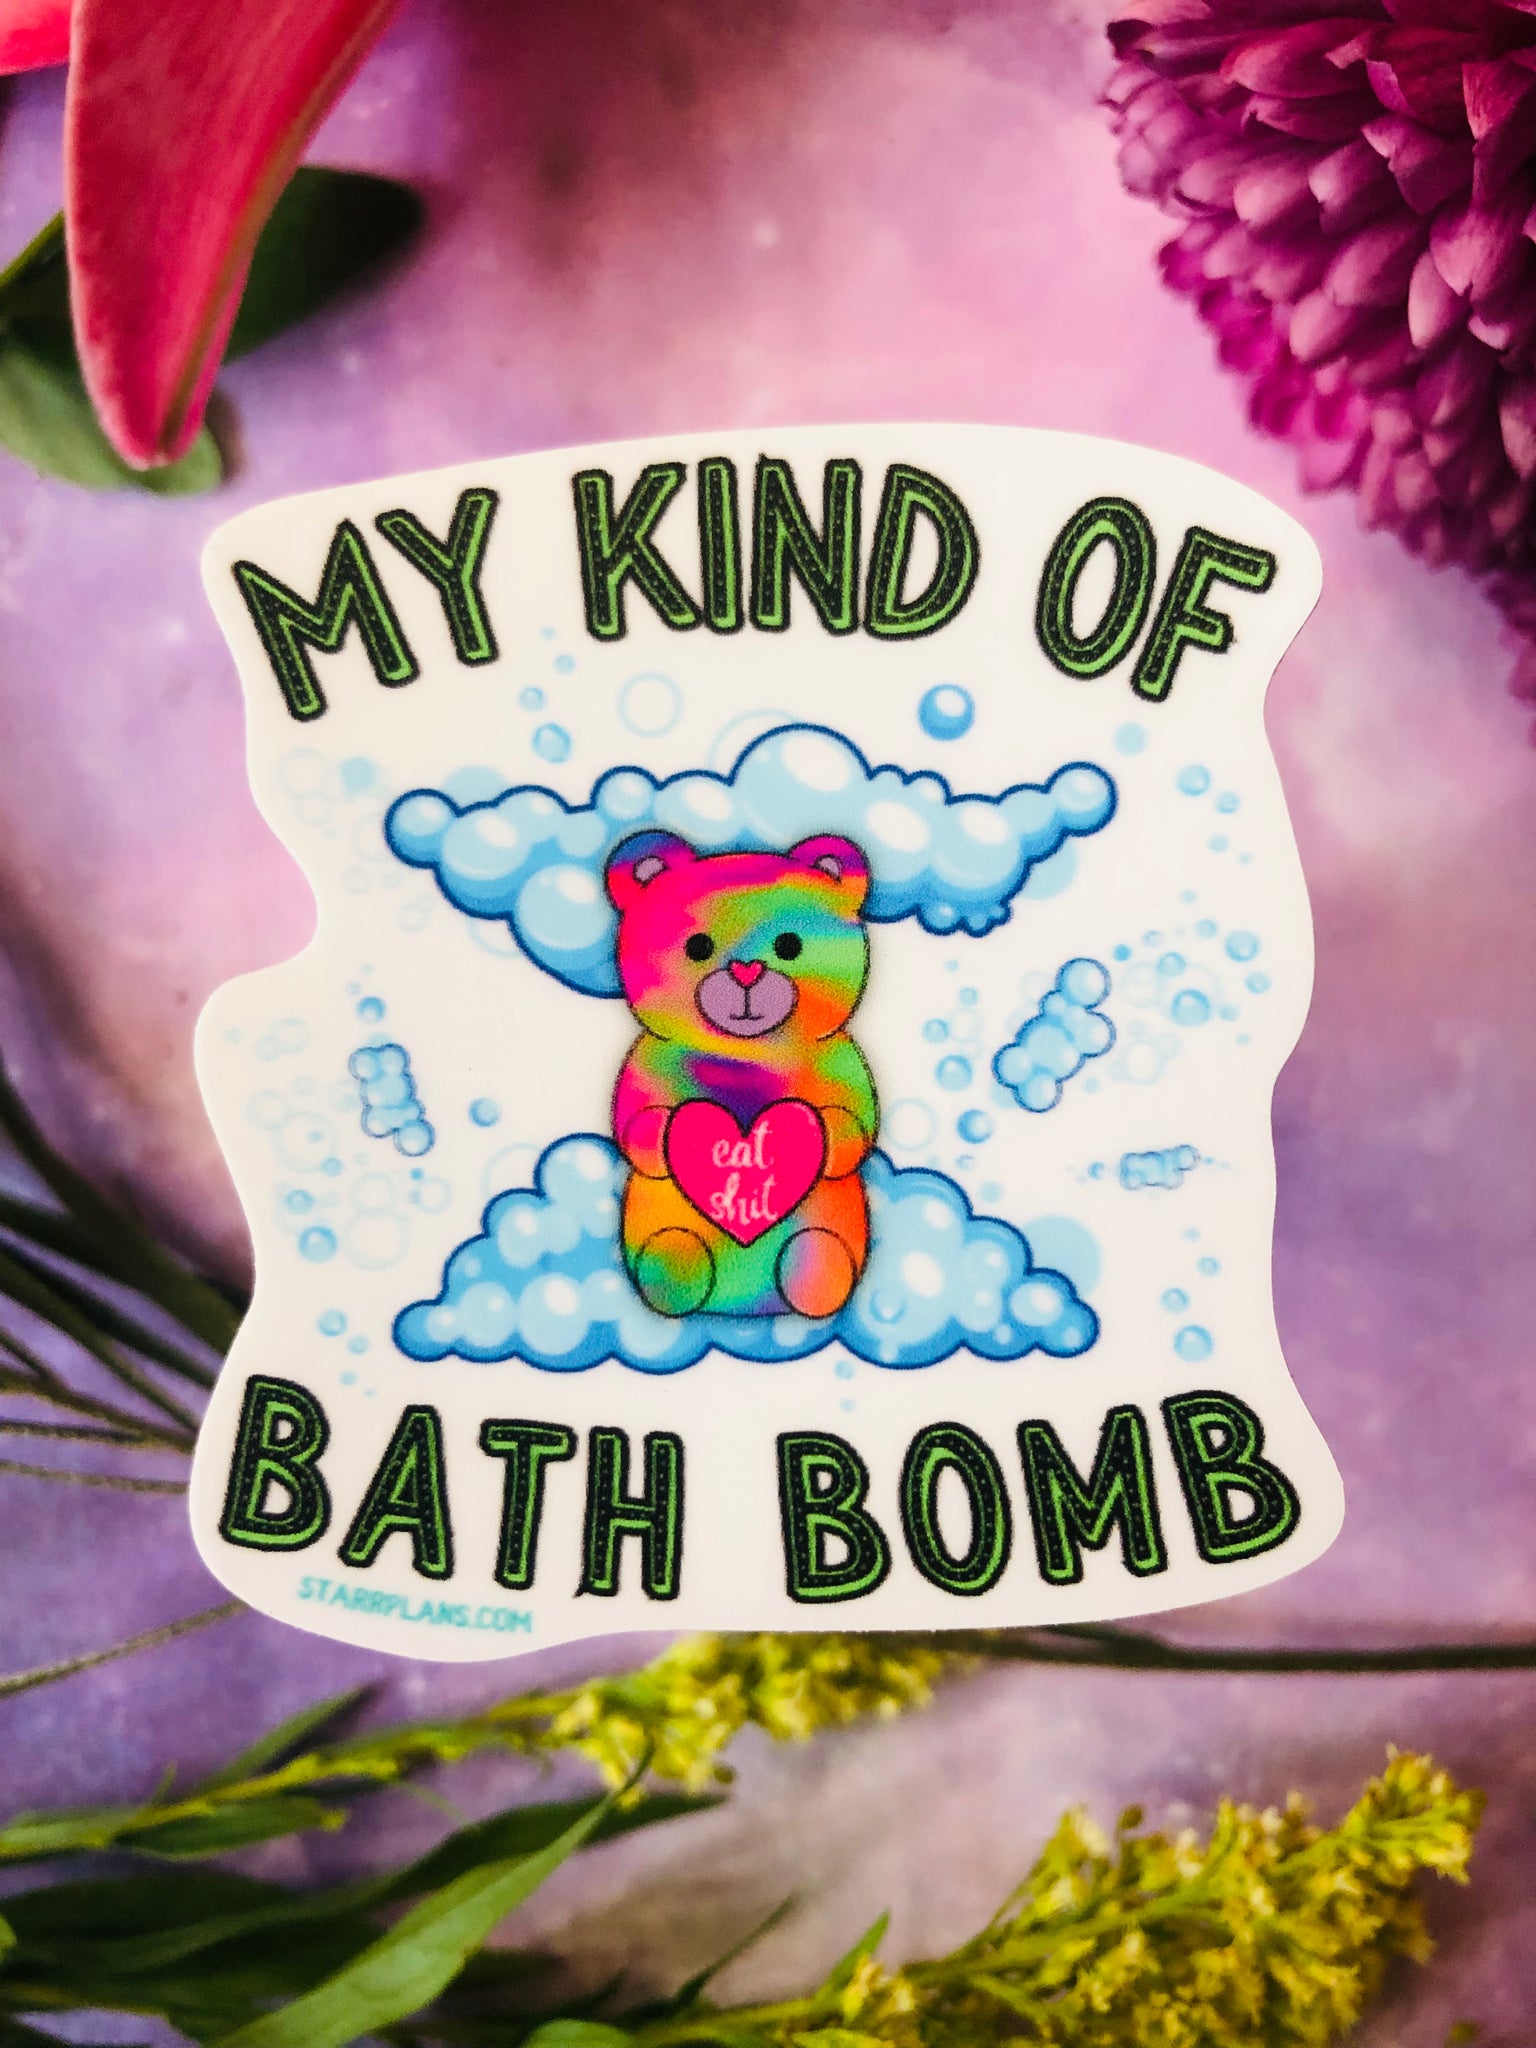 "My Kind of Bath Bomb" Snarky || Eat Sh1t || Vinyl Sticker || Starr Plans Exclusive